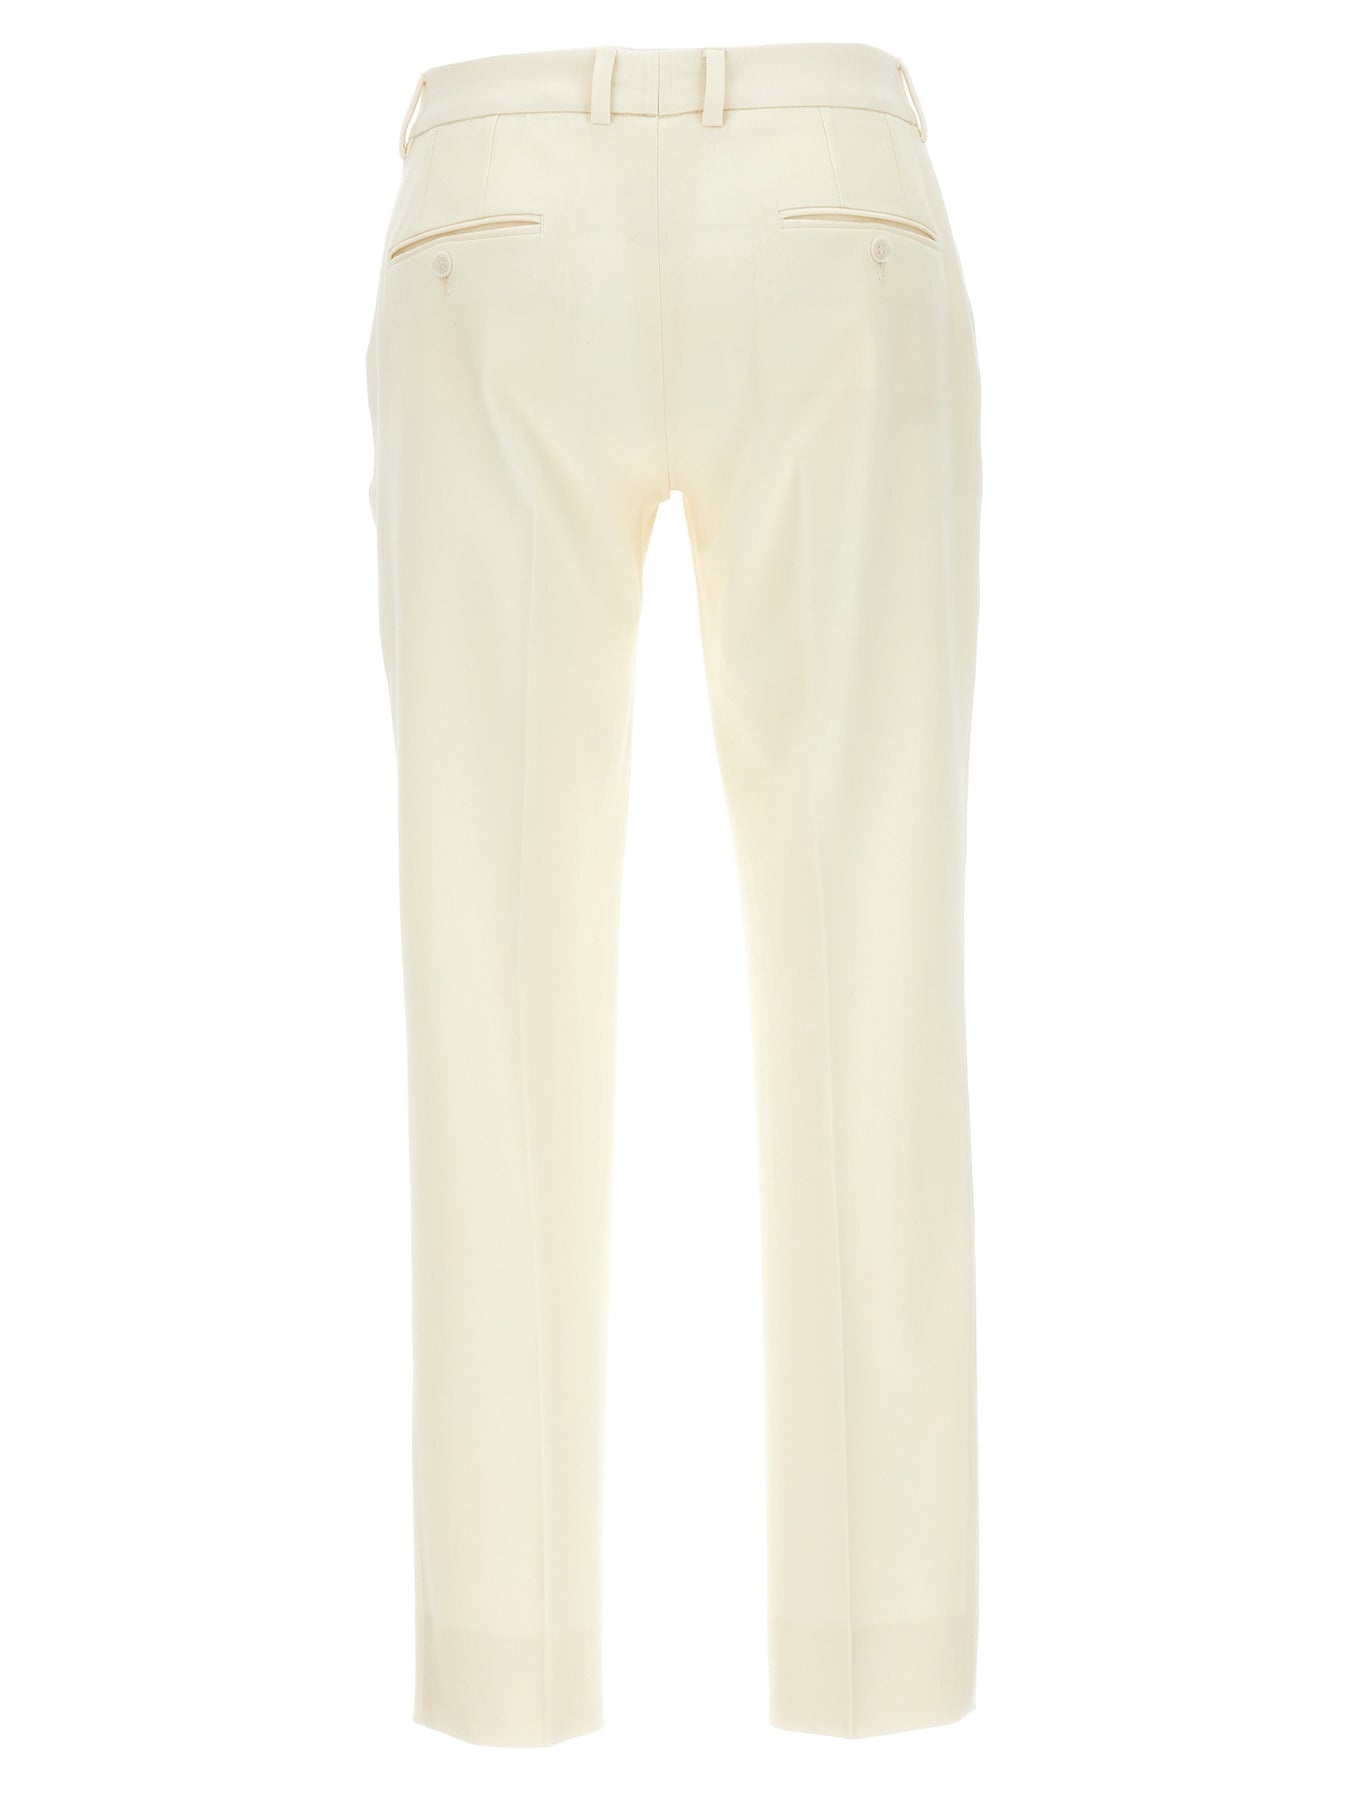 Essential Pants White - 2